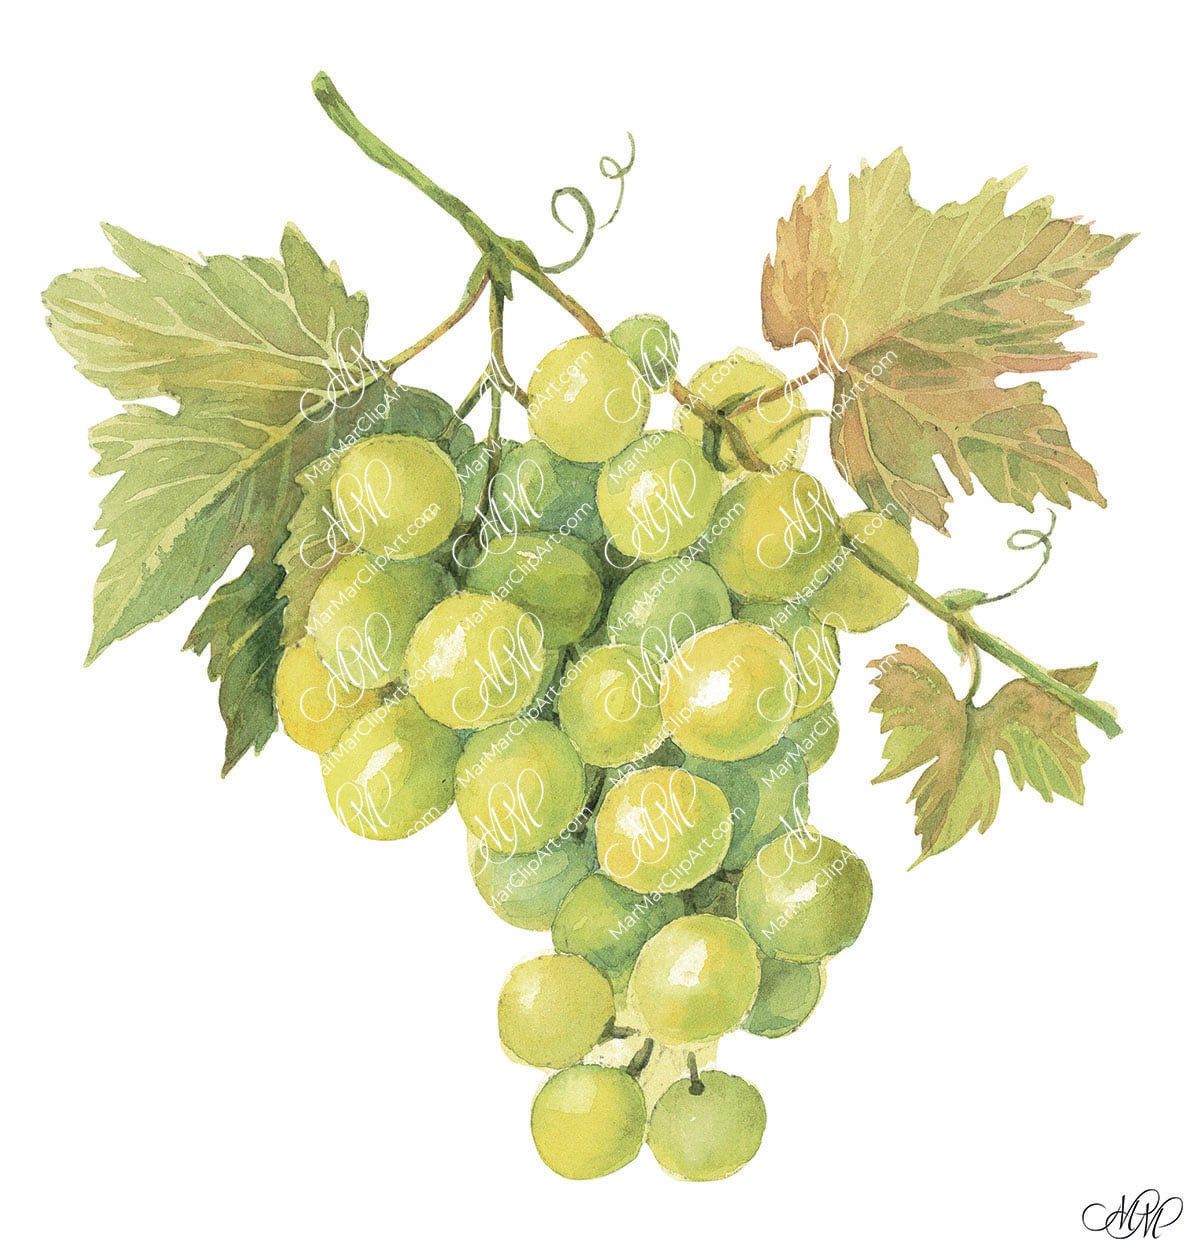 Grape green. Watercolour vintage style illustration